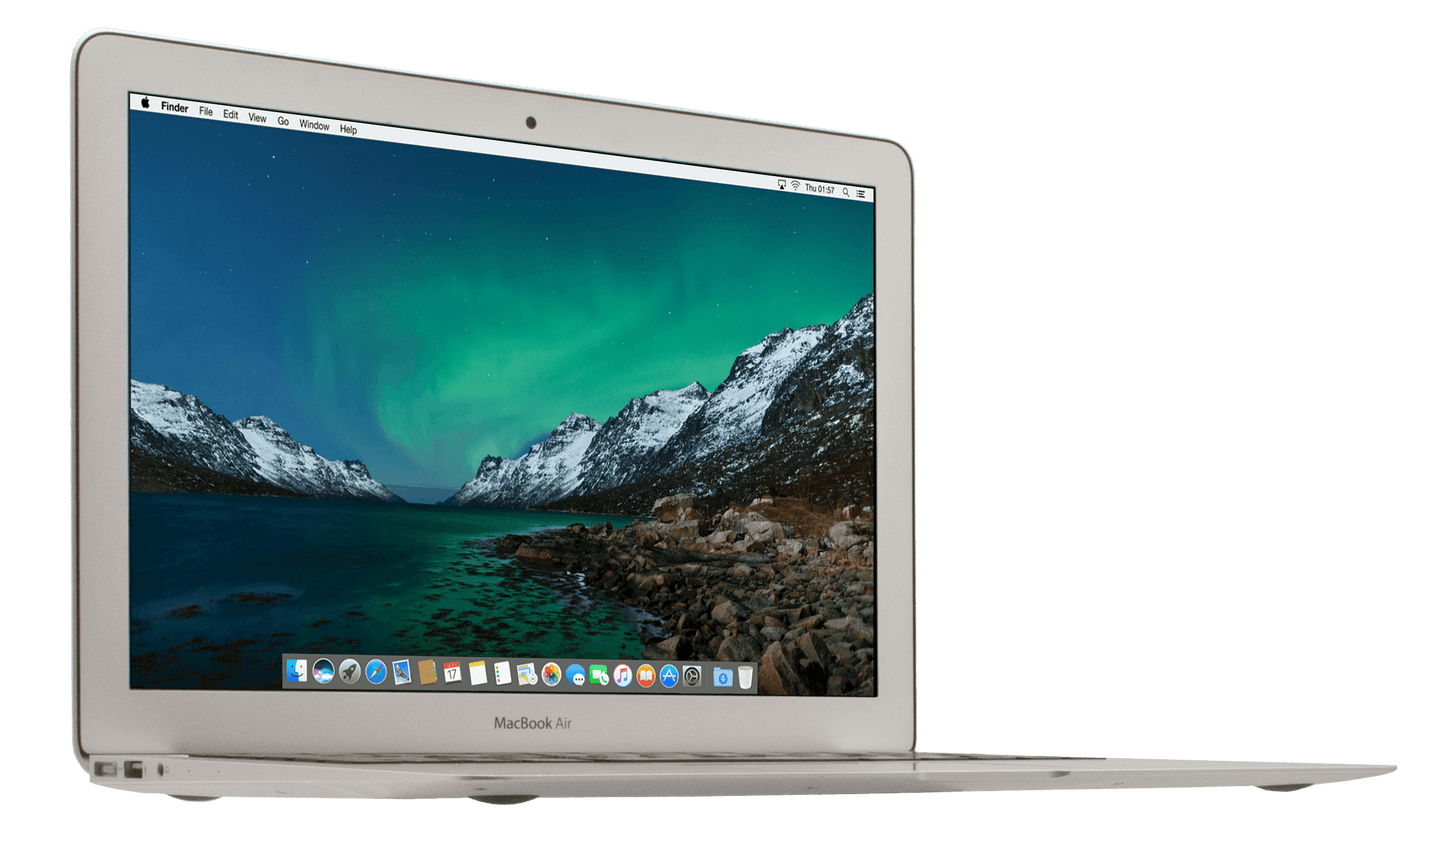 Refurbished MacBook Air 13" i5 1.8 8GB 256GB 2017 - test-product-media-liquid1